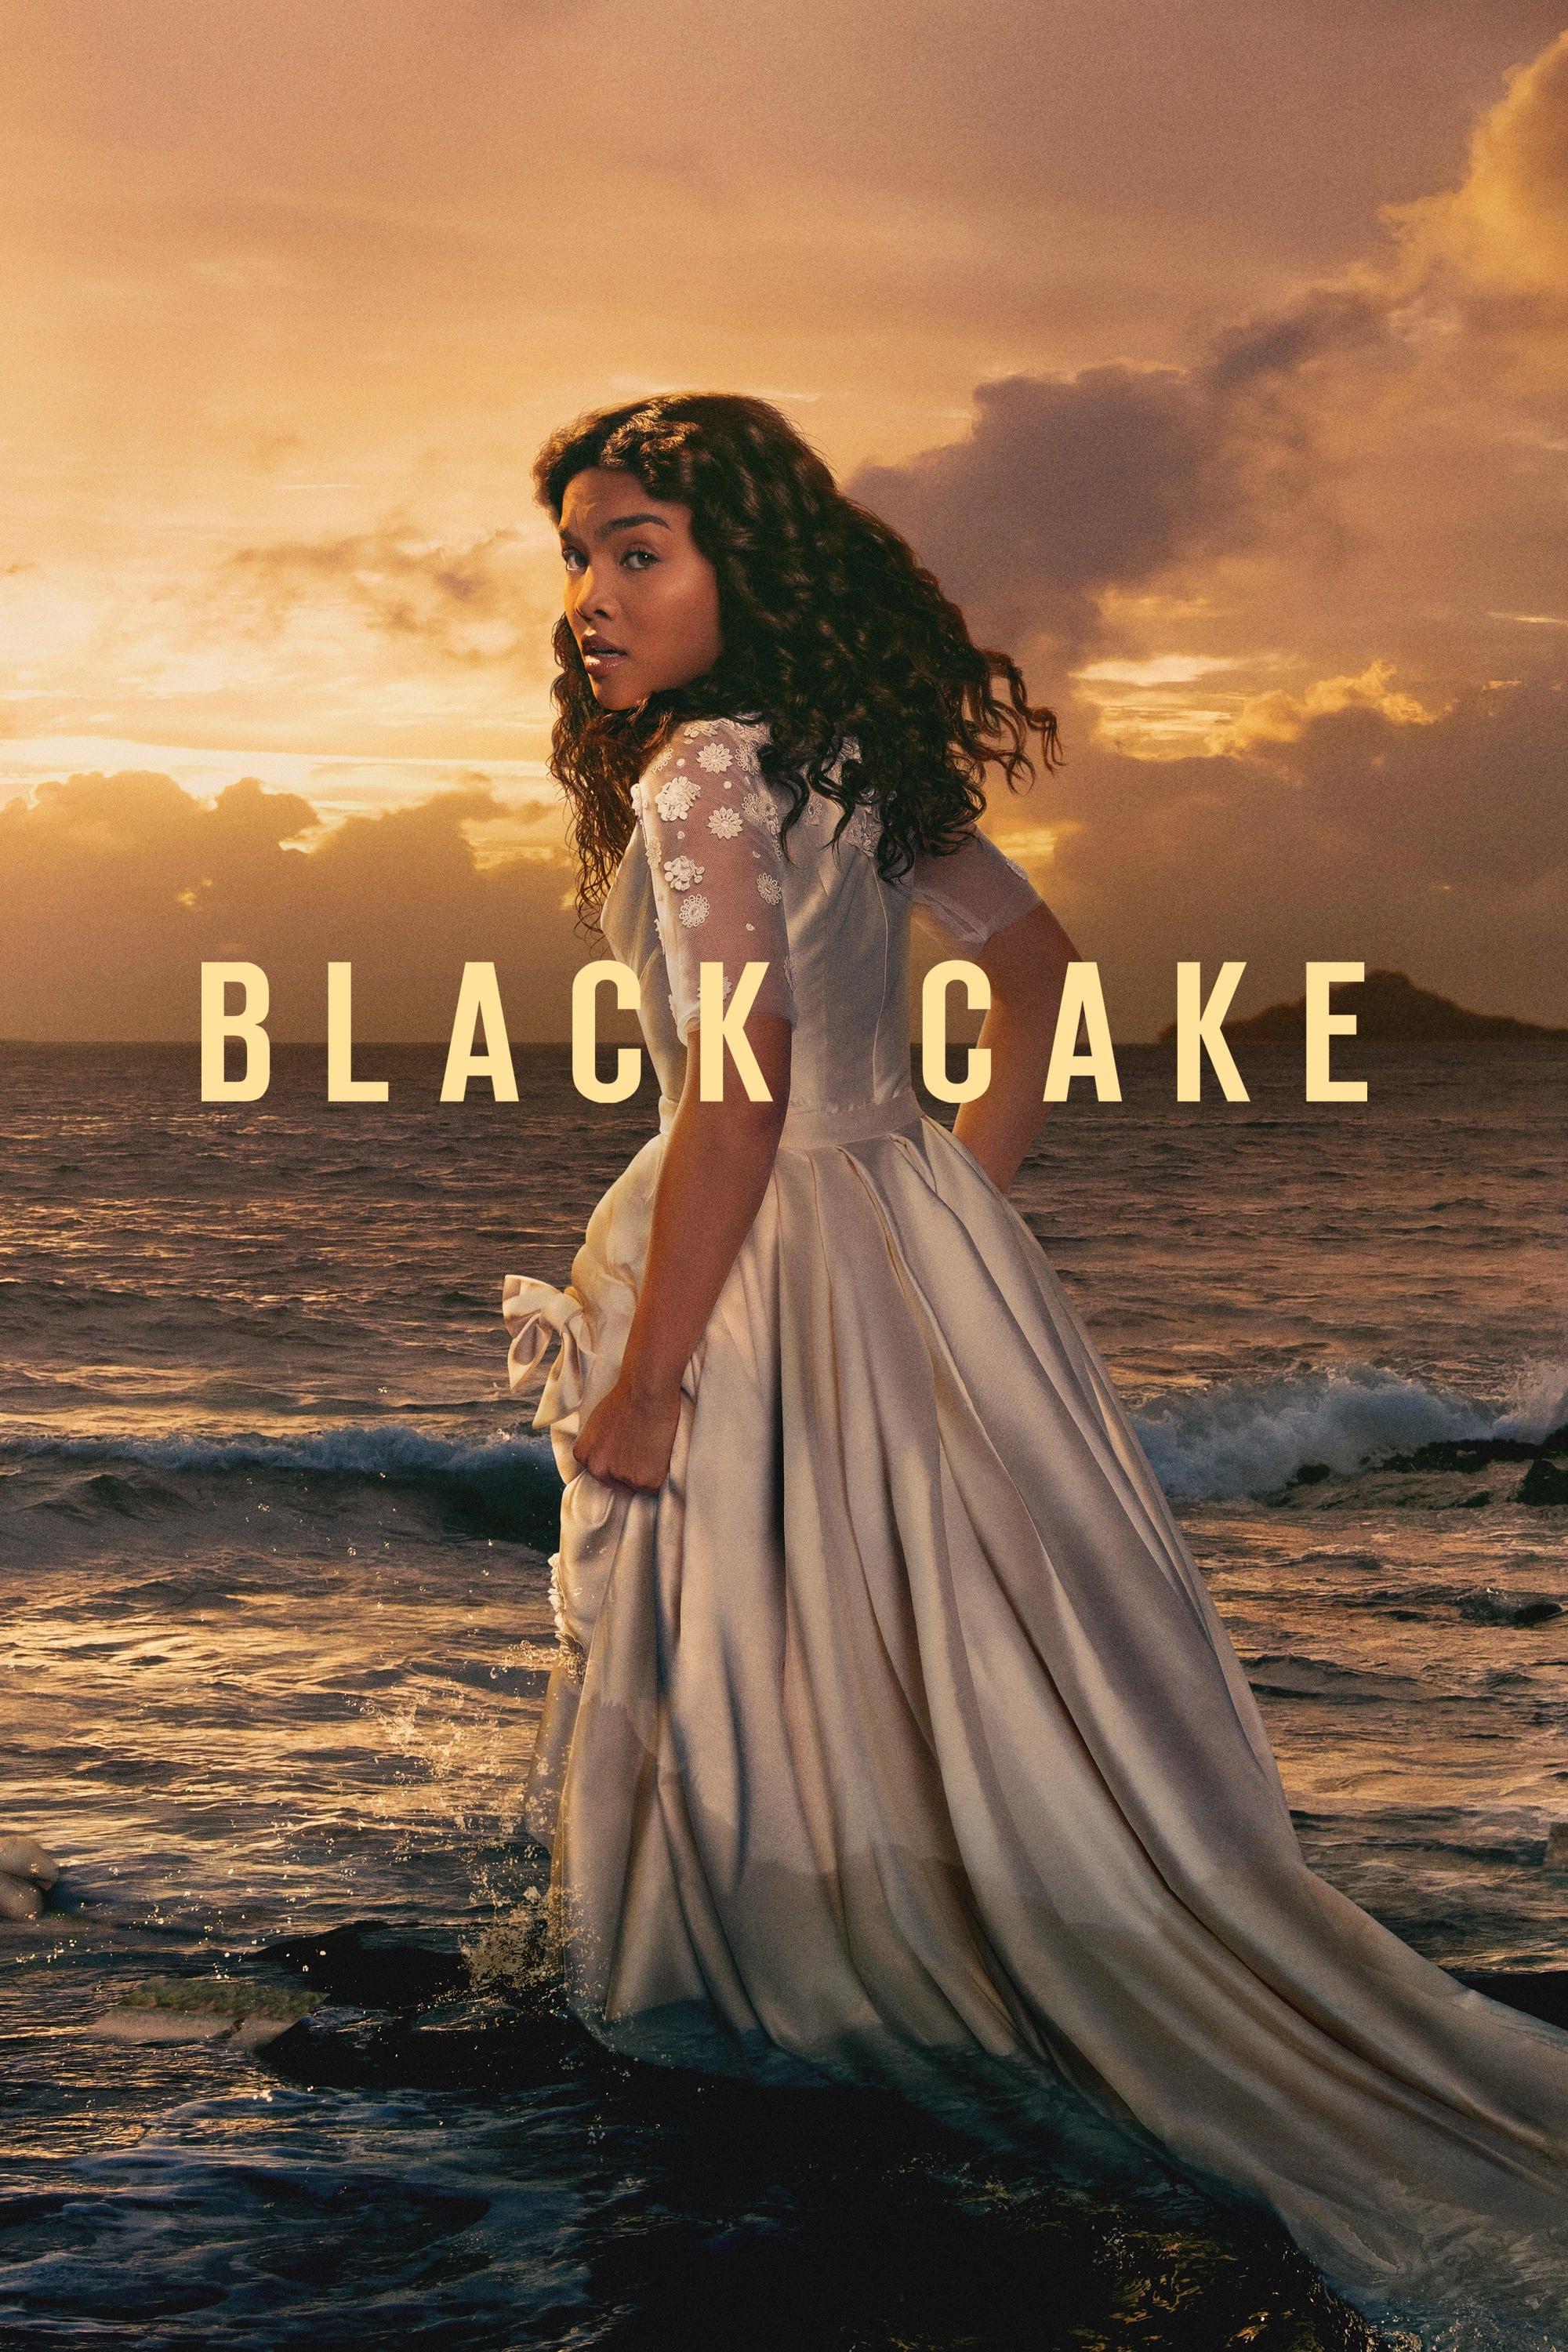 Black Cake poster